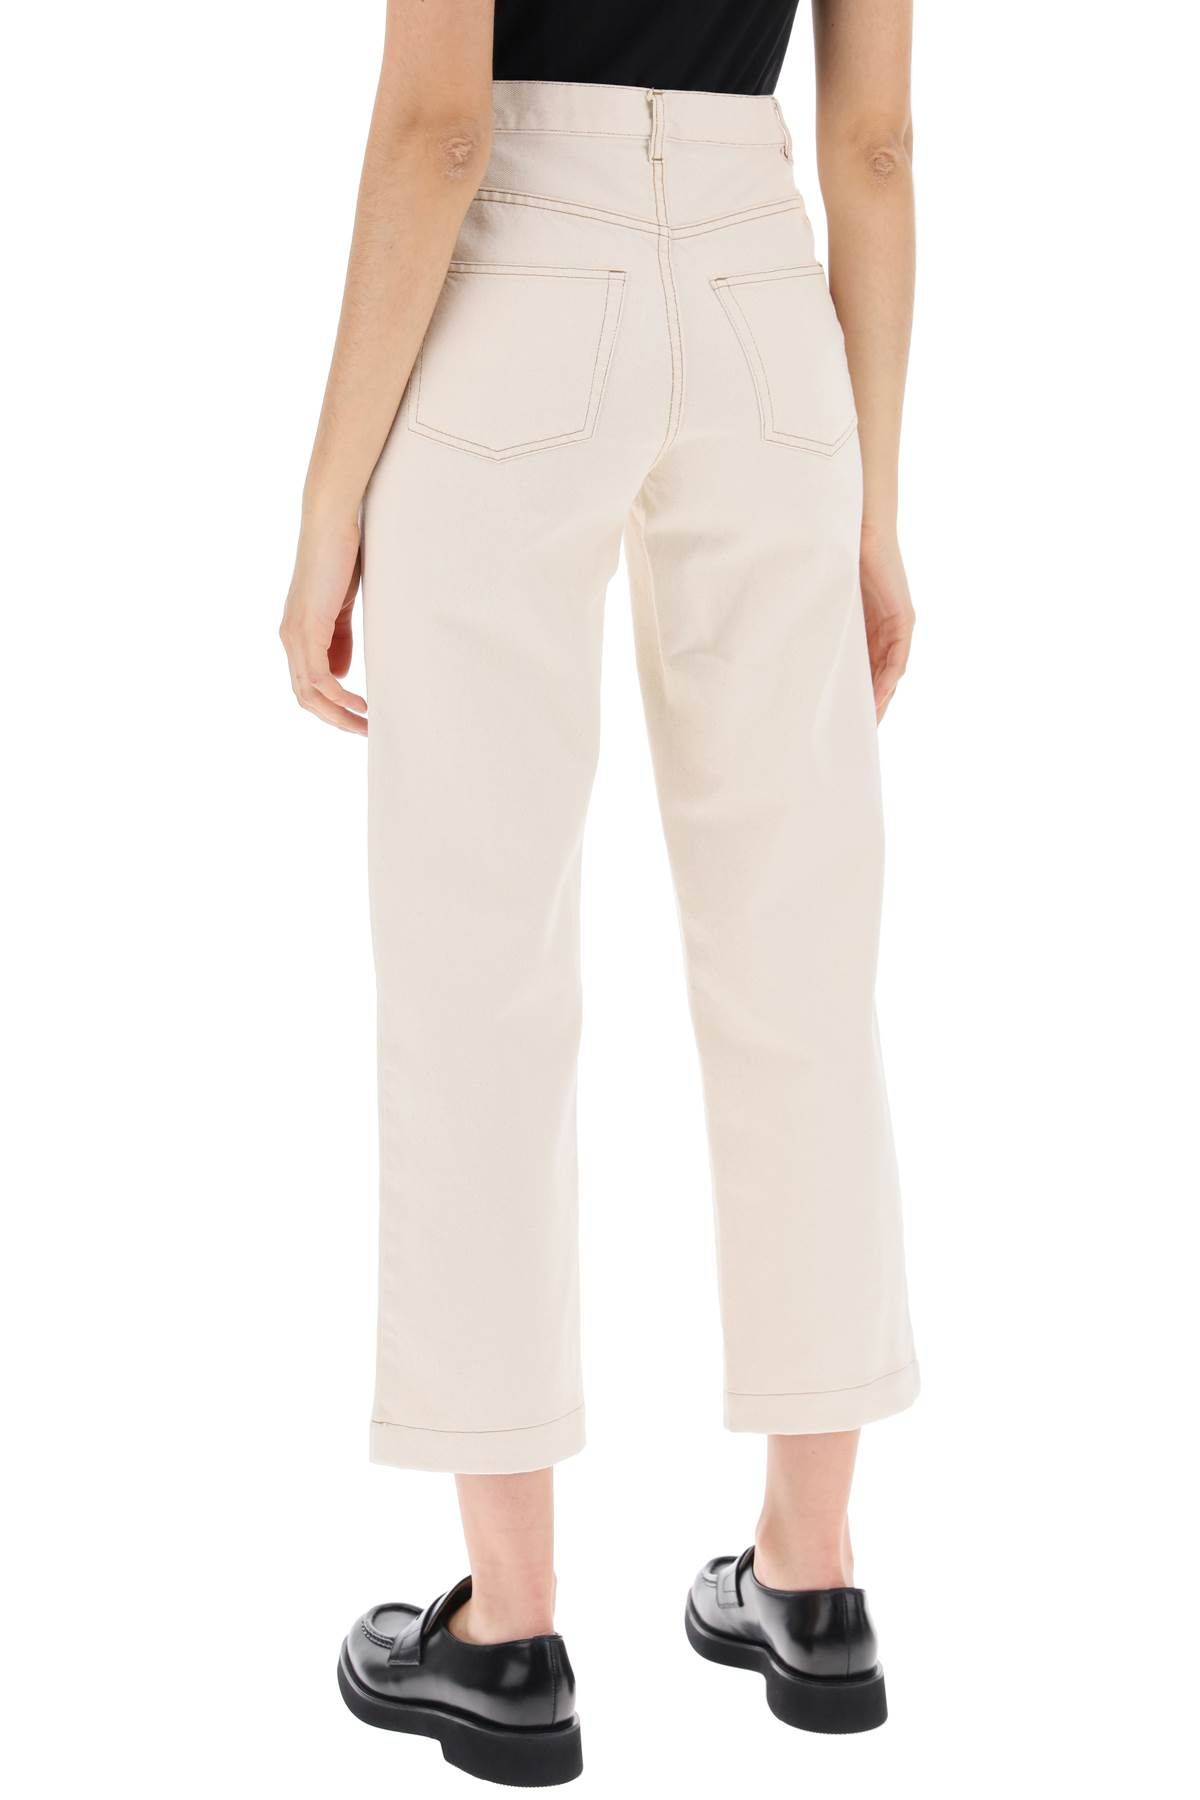 Shop Apc New Sailor Jeans For Men In White